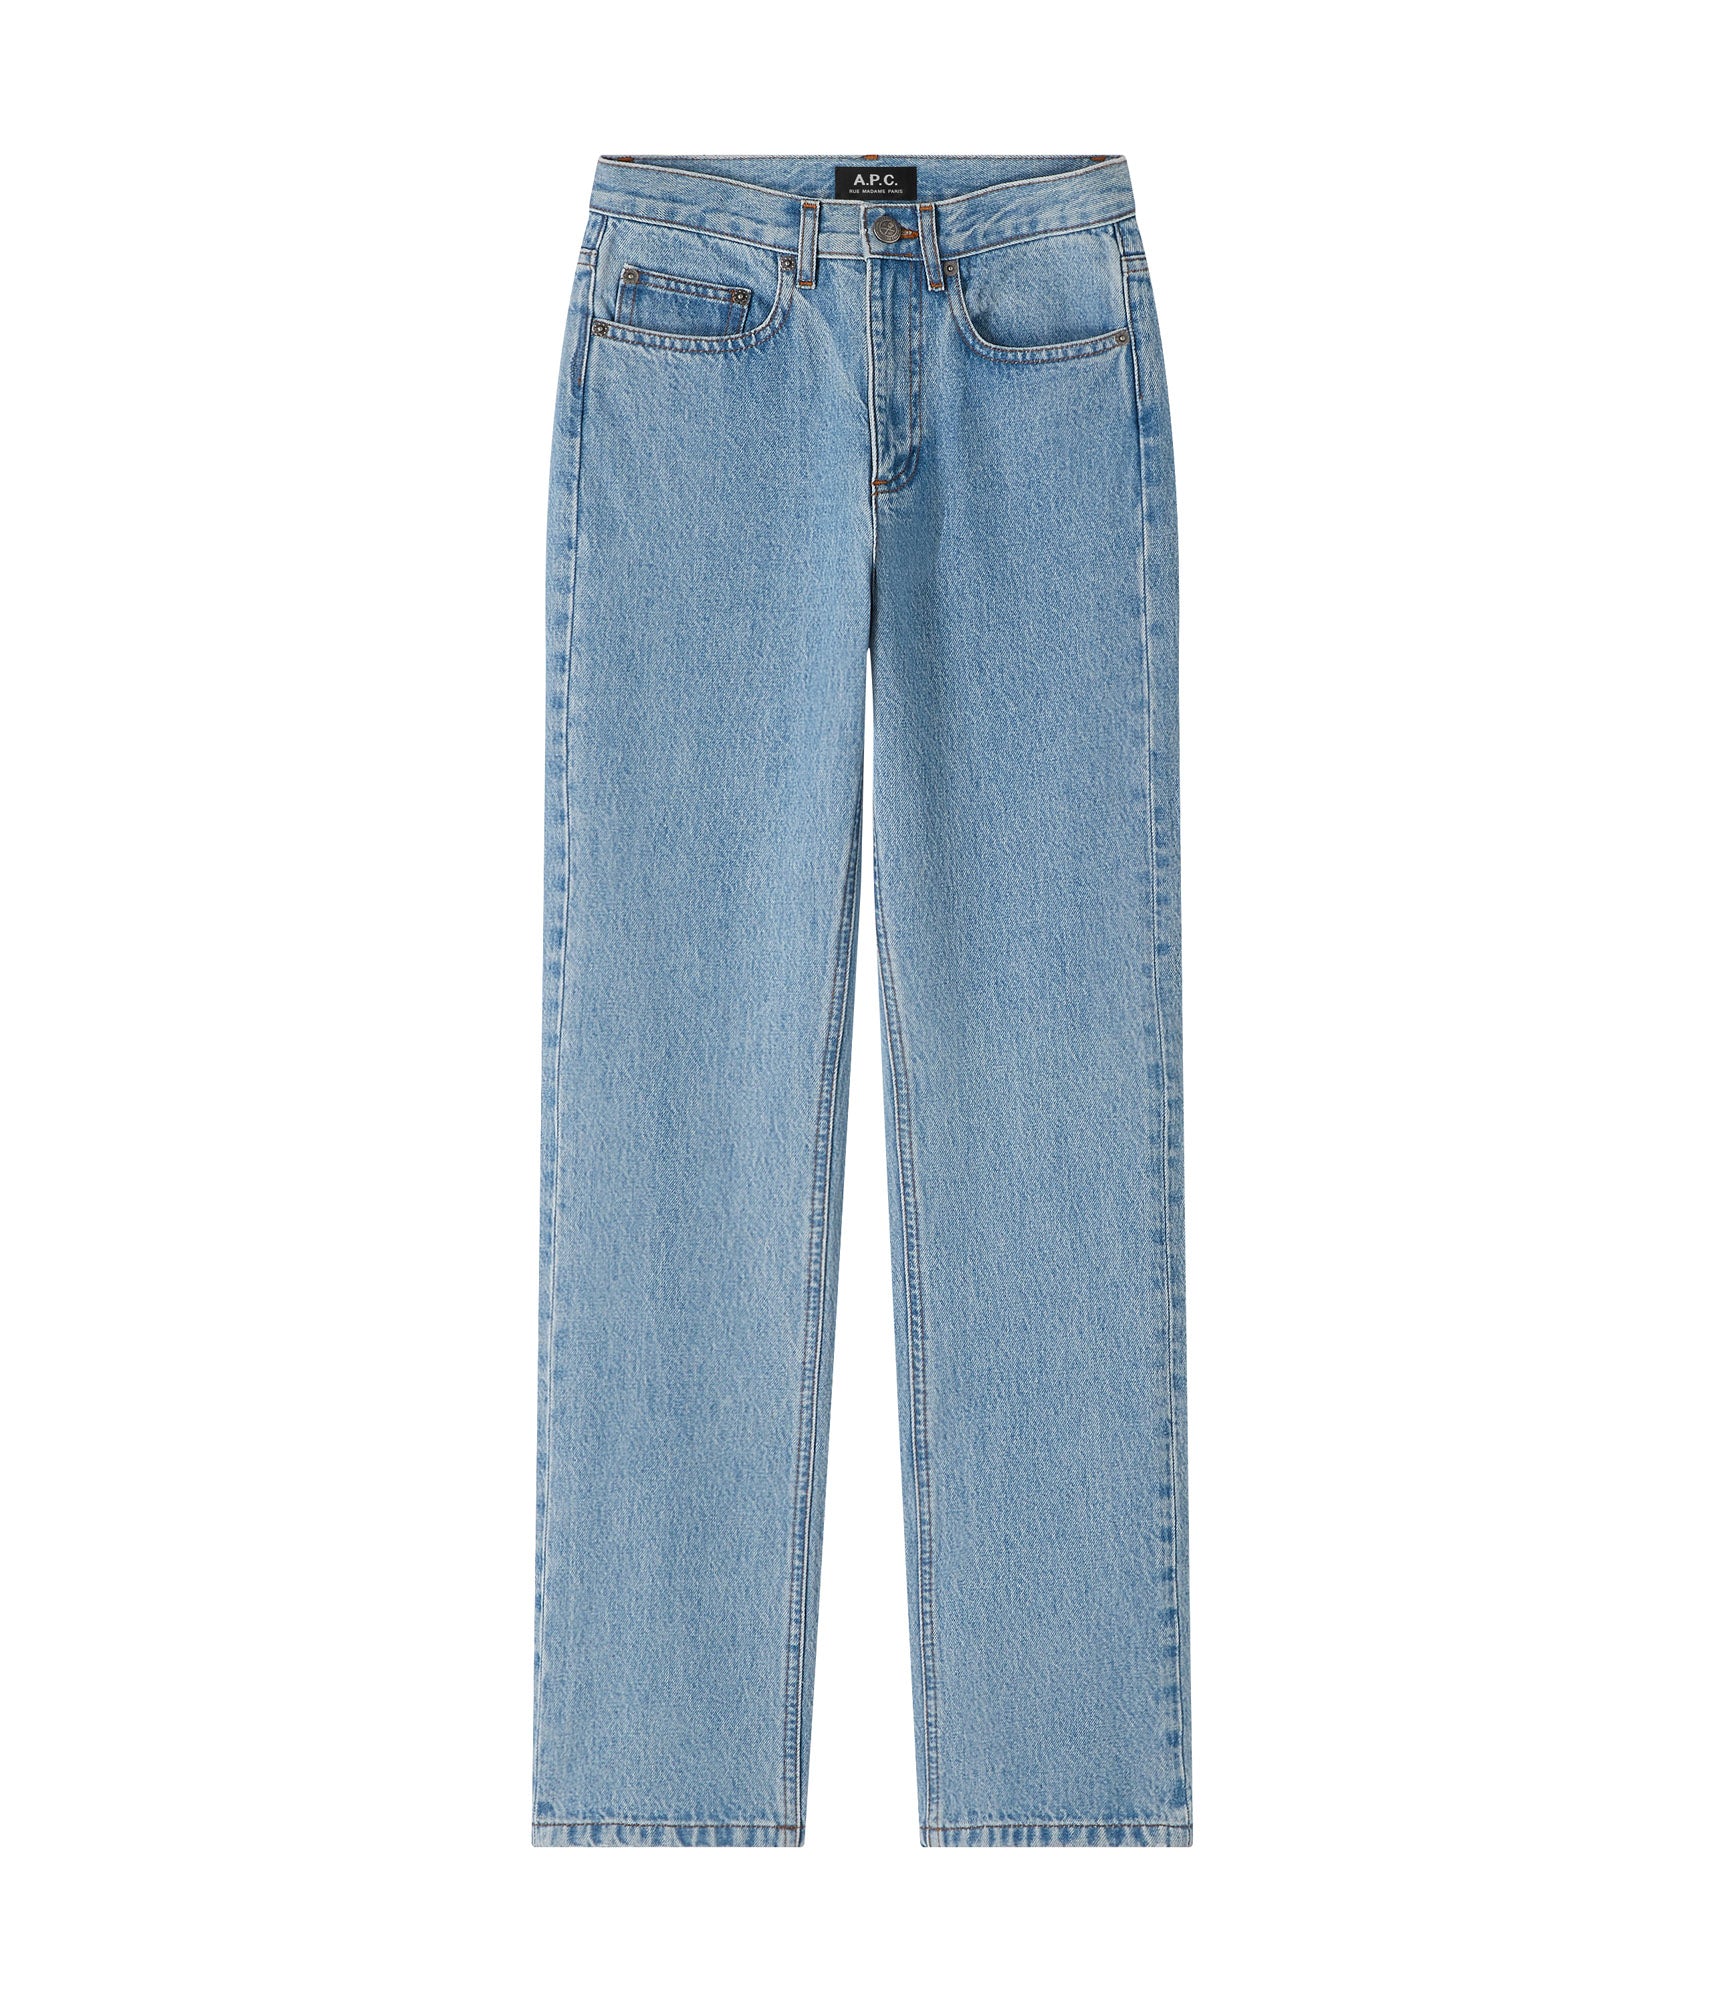 Standard jeans | High-rise straight-leg jeans in denim. | A.P.C.